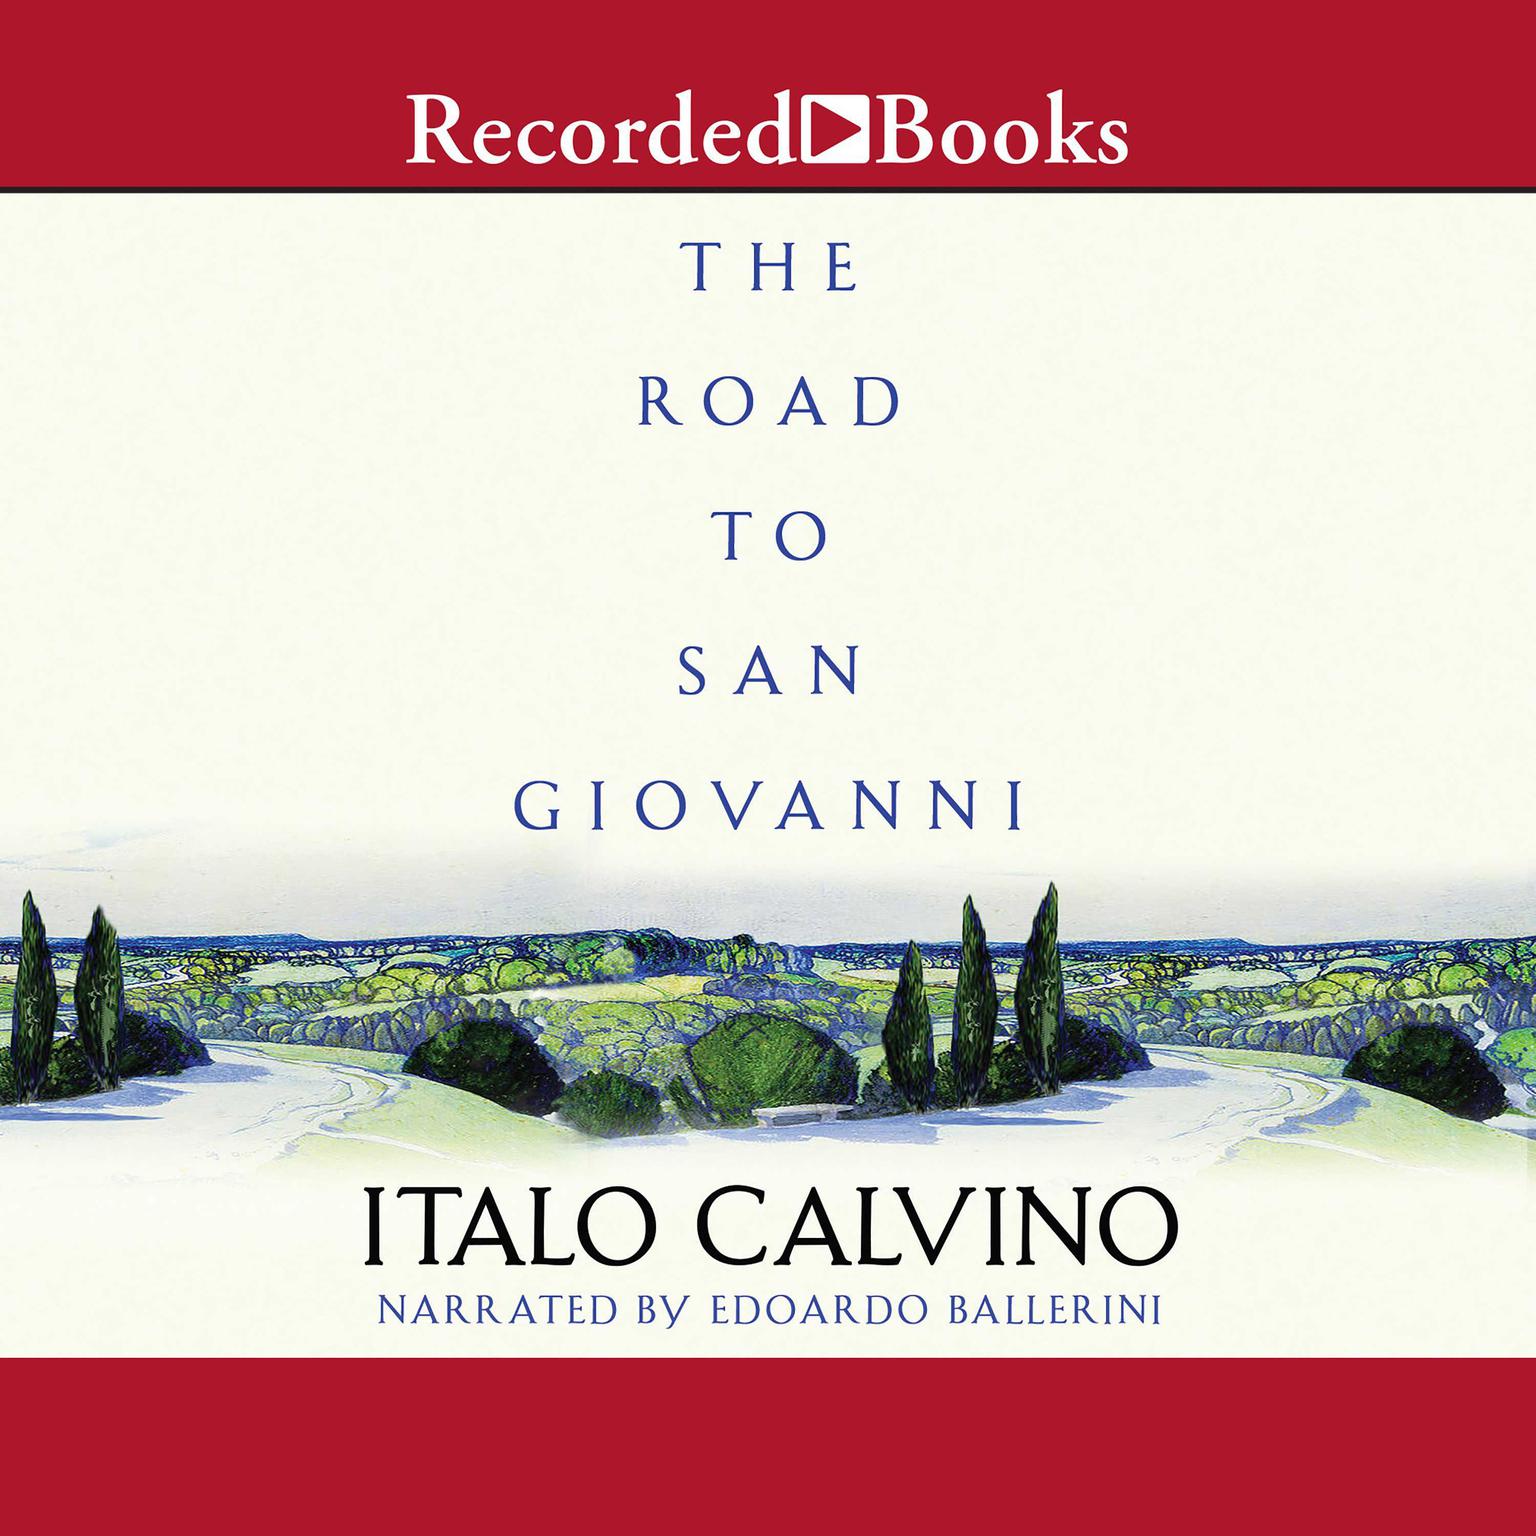 The Road to San Giovanni Audiobook, by Italo Calvino